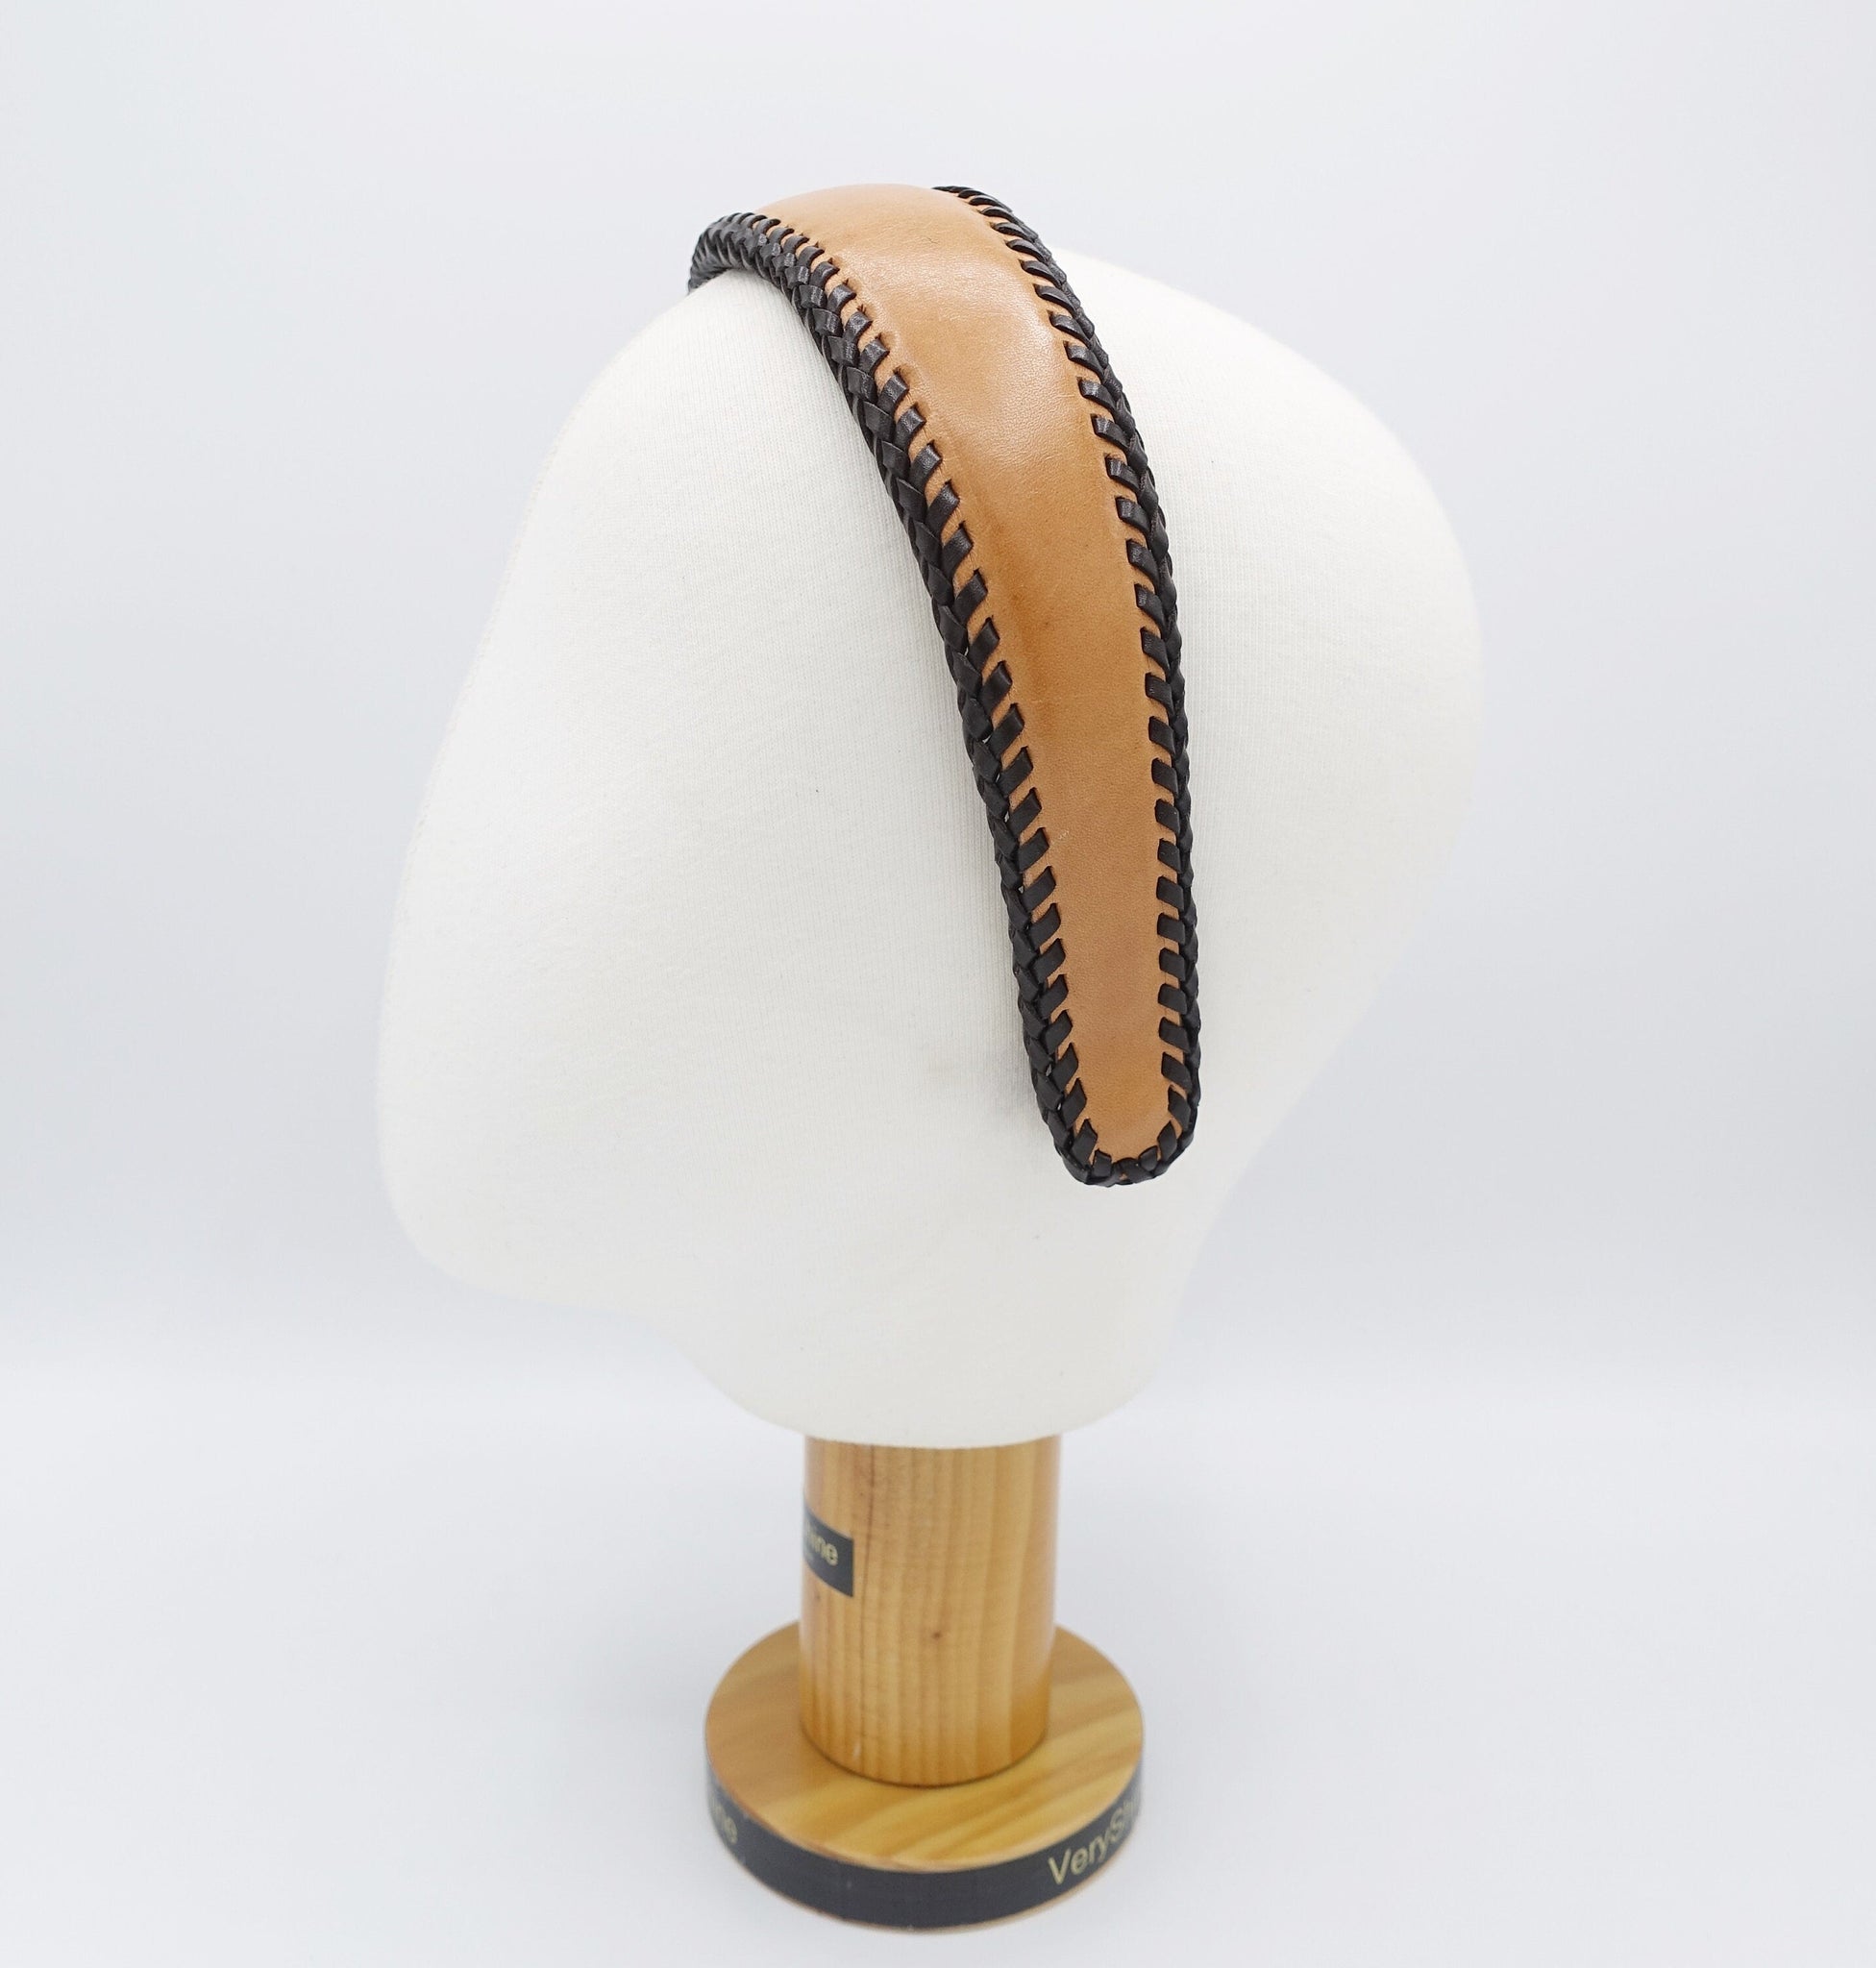 veryshine.com Headband leather lace headband, handmade leather headband, VeryShine headbands for women